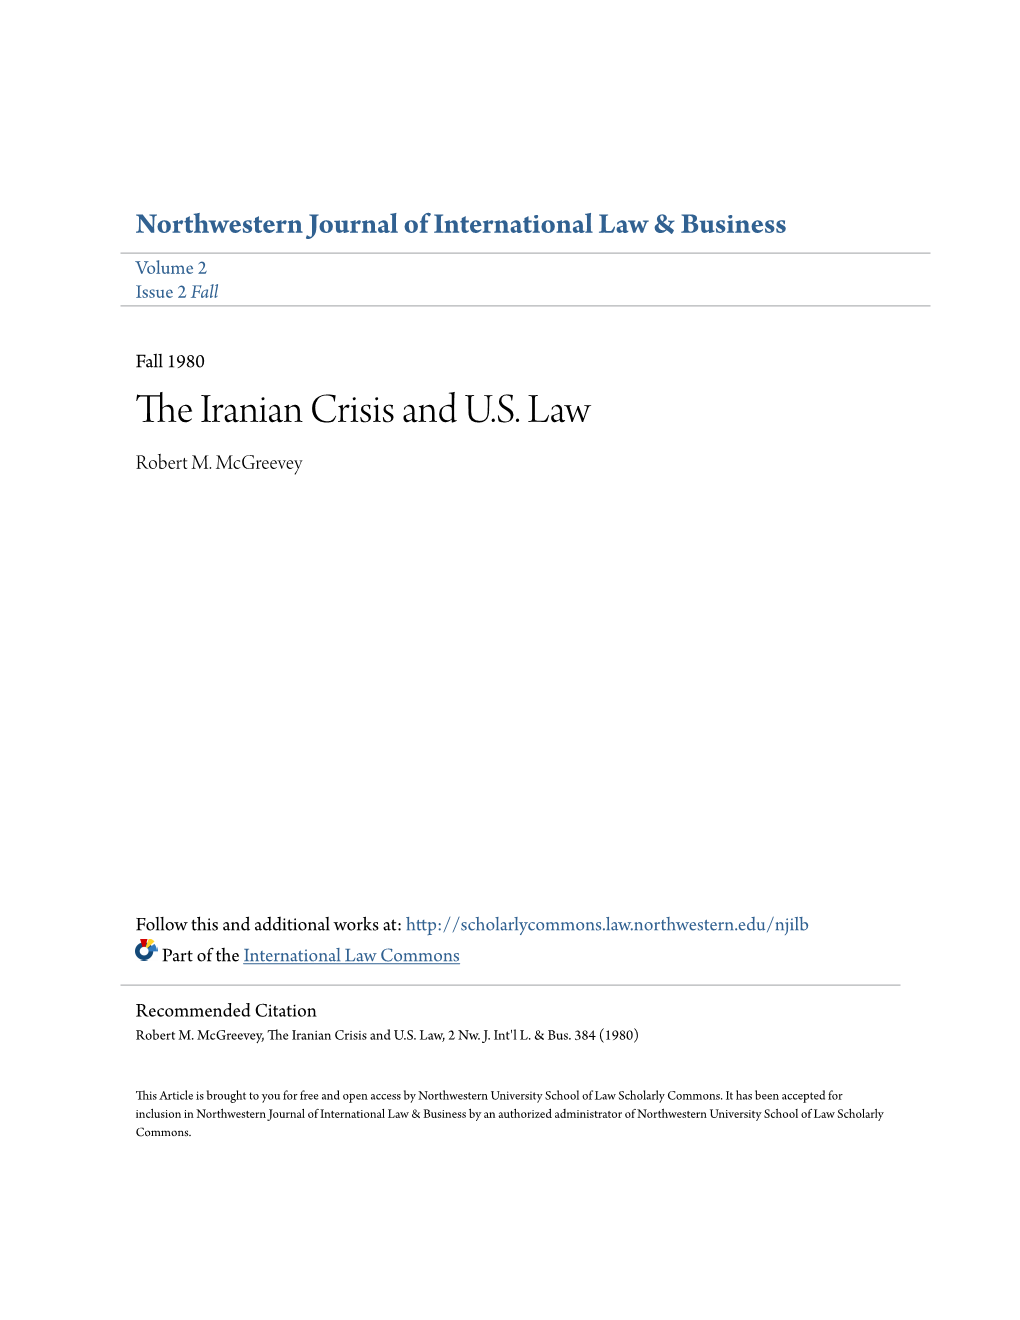 The Iranian Crisis and U.S. Law